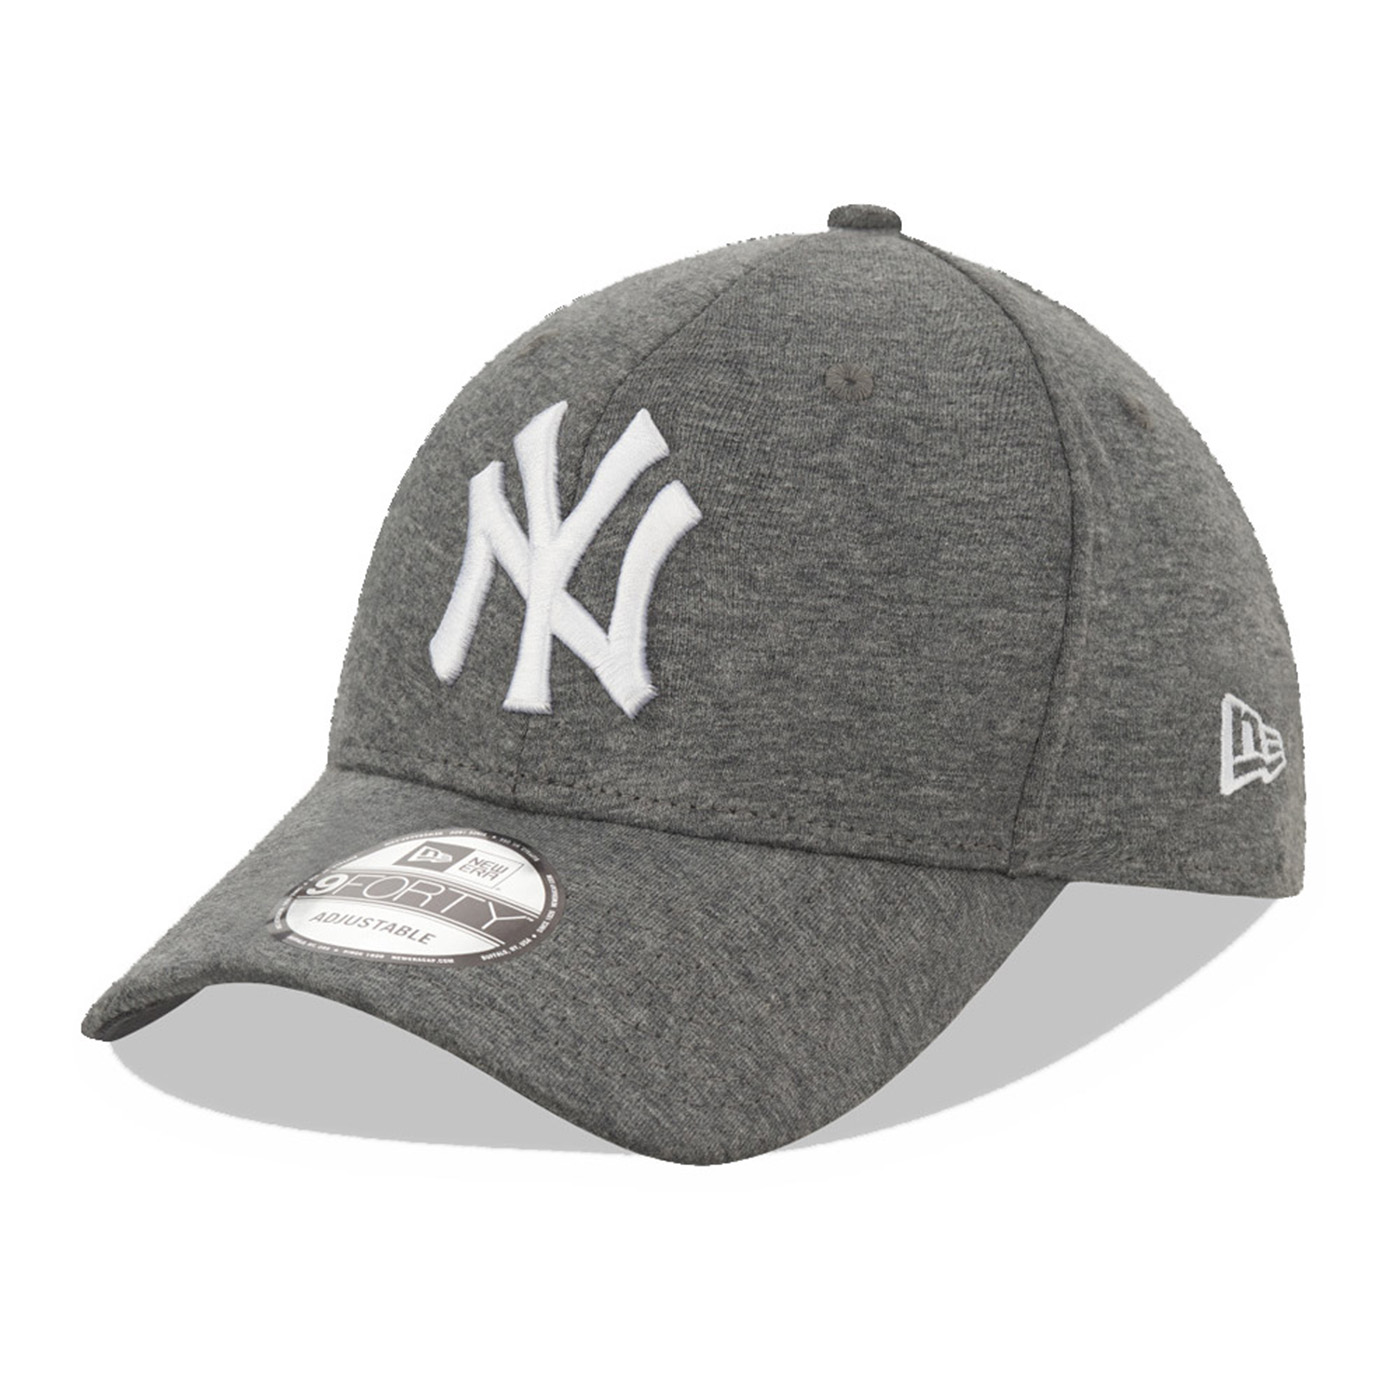 New Era 9FORTY New York Yankees Cap Greyheather / White